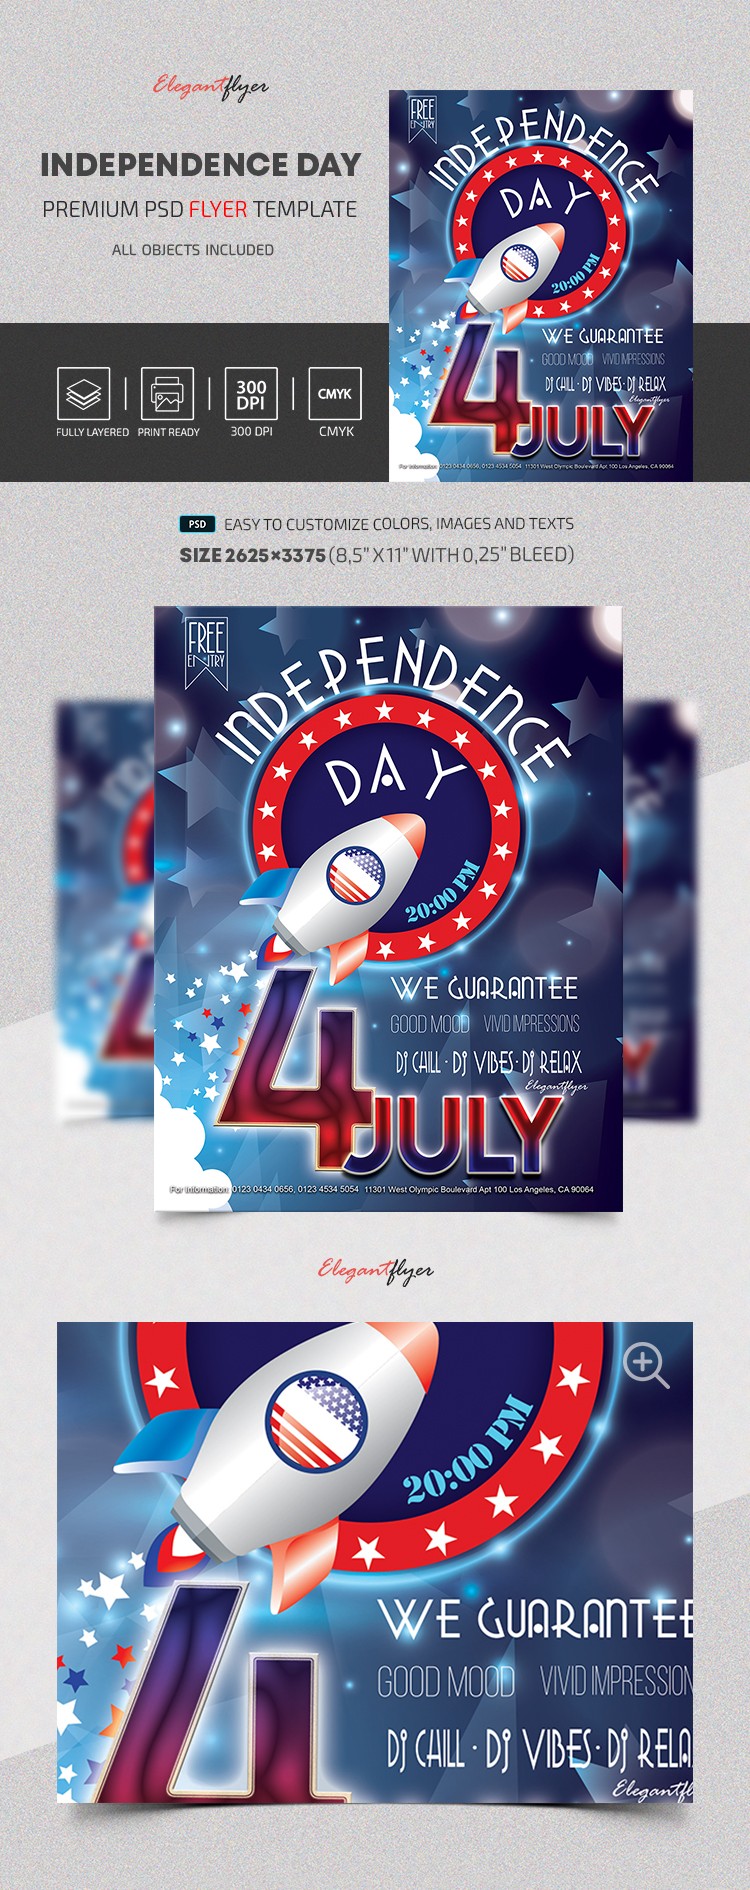 Independence Day 4 July by ElegantFlyer